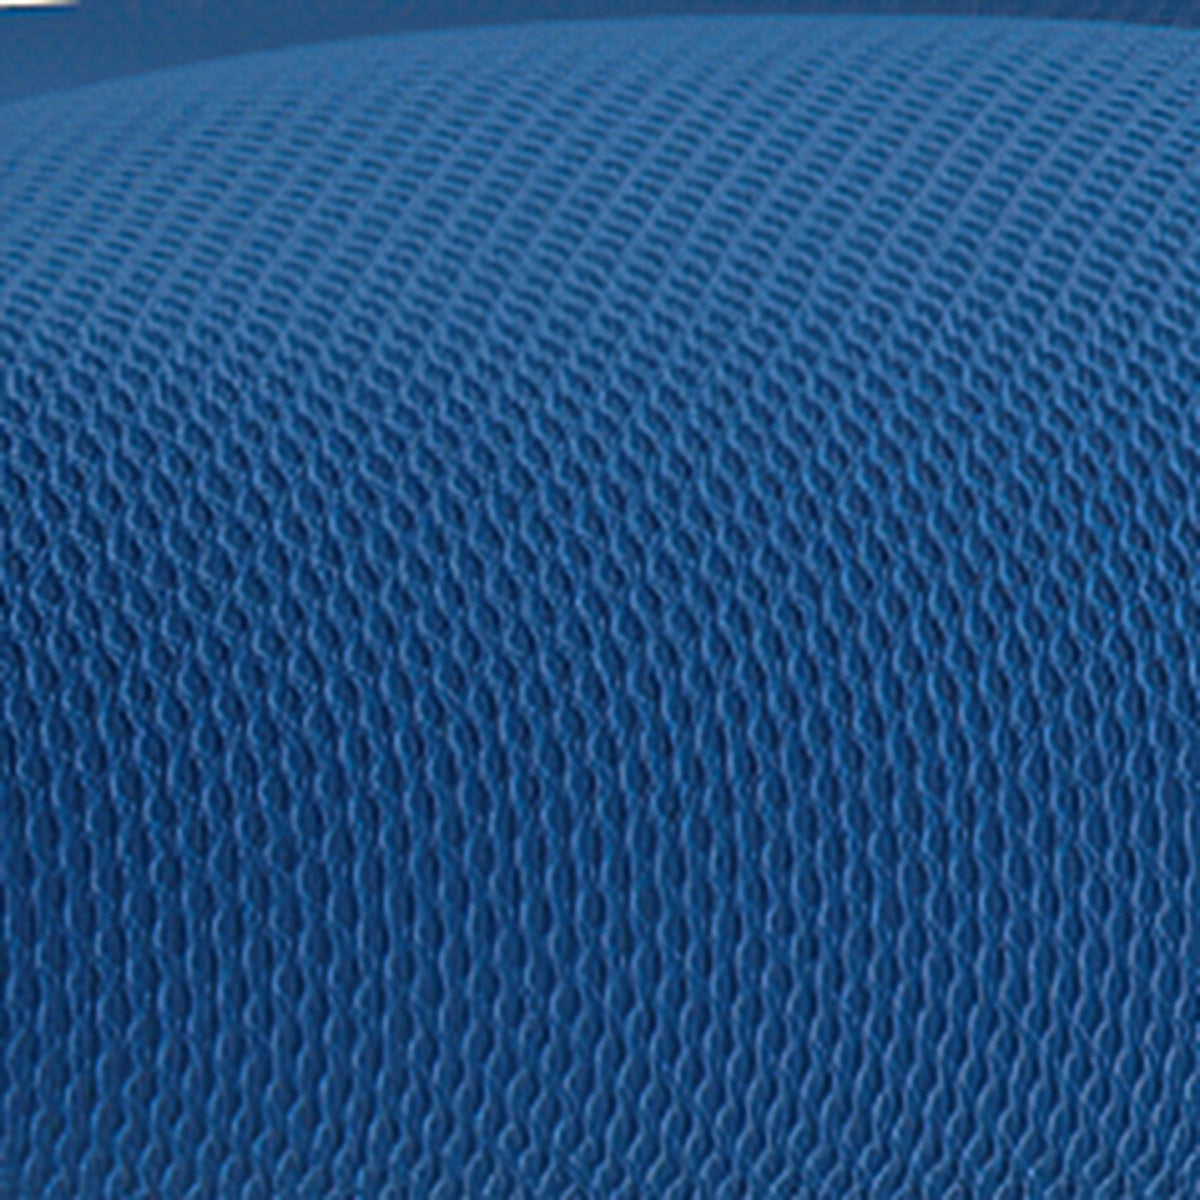 Blue Mesh/White Frame |#| Mid-Back Ergonomic Multifunction Mesh Chair with Polyurethane Wheels-Blue